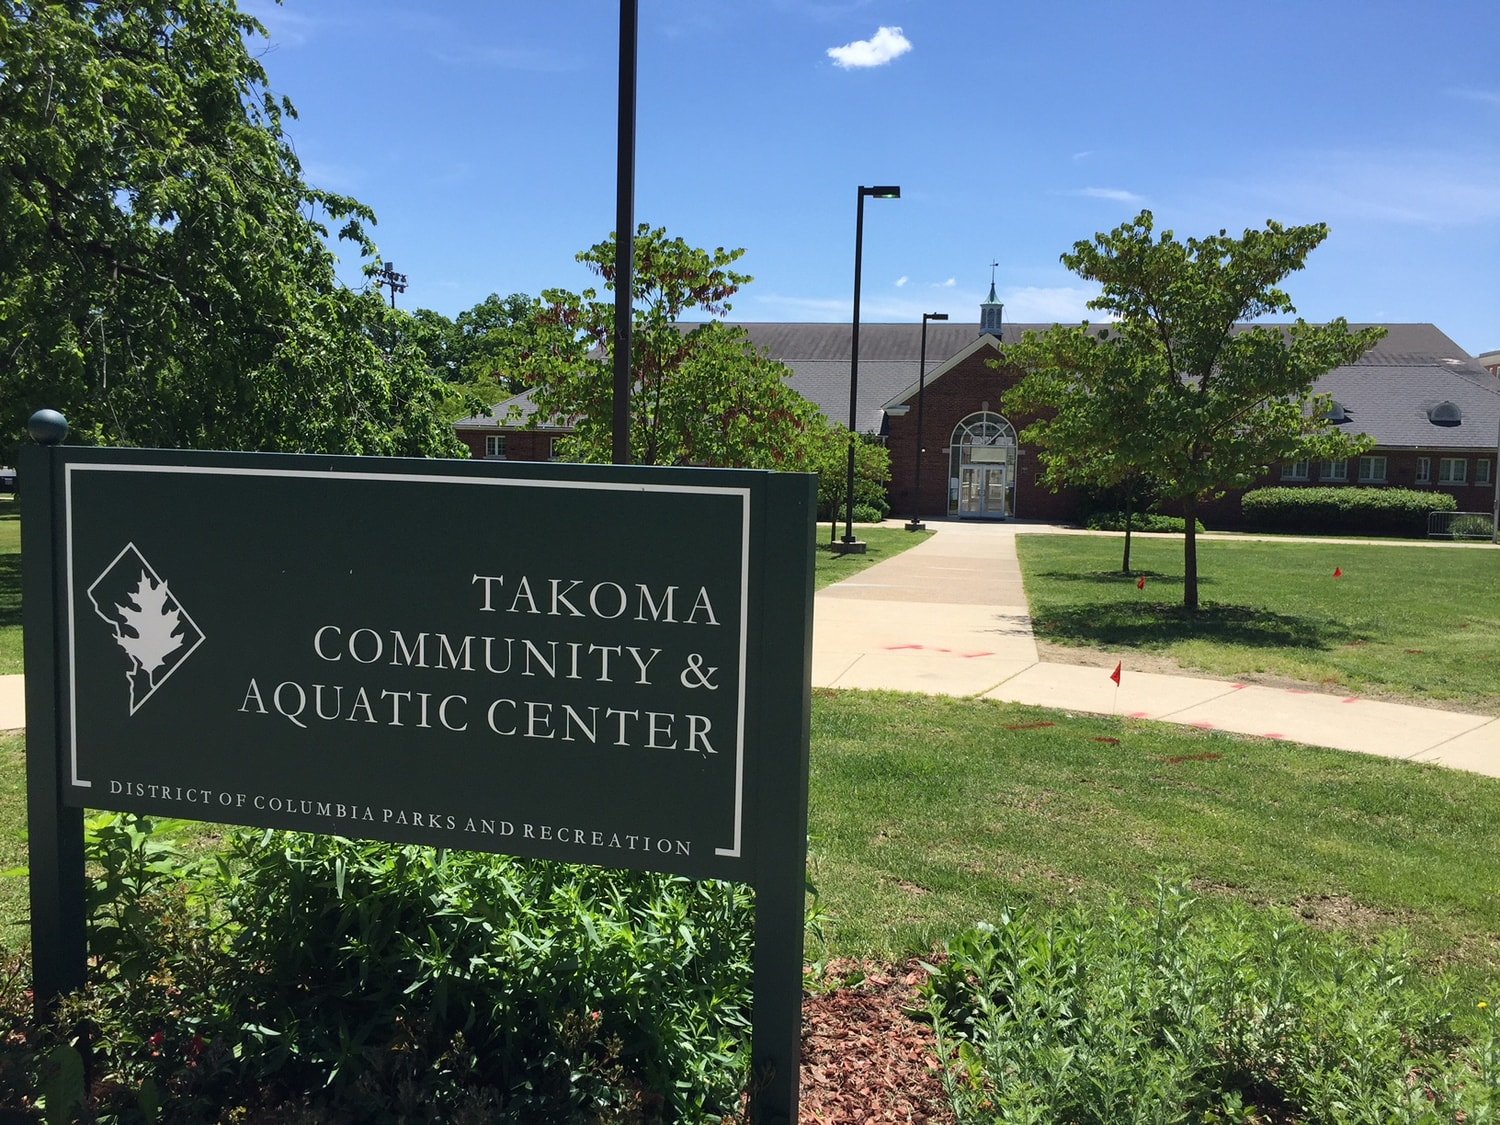 Takoma Community & Aquatic Center - Washington, DC